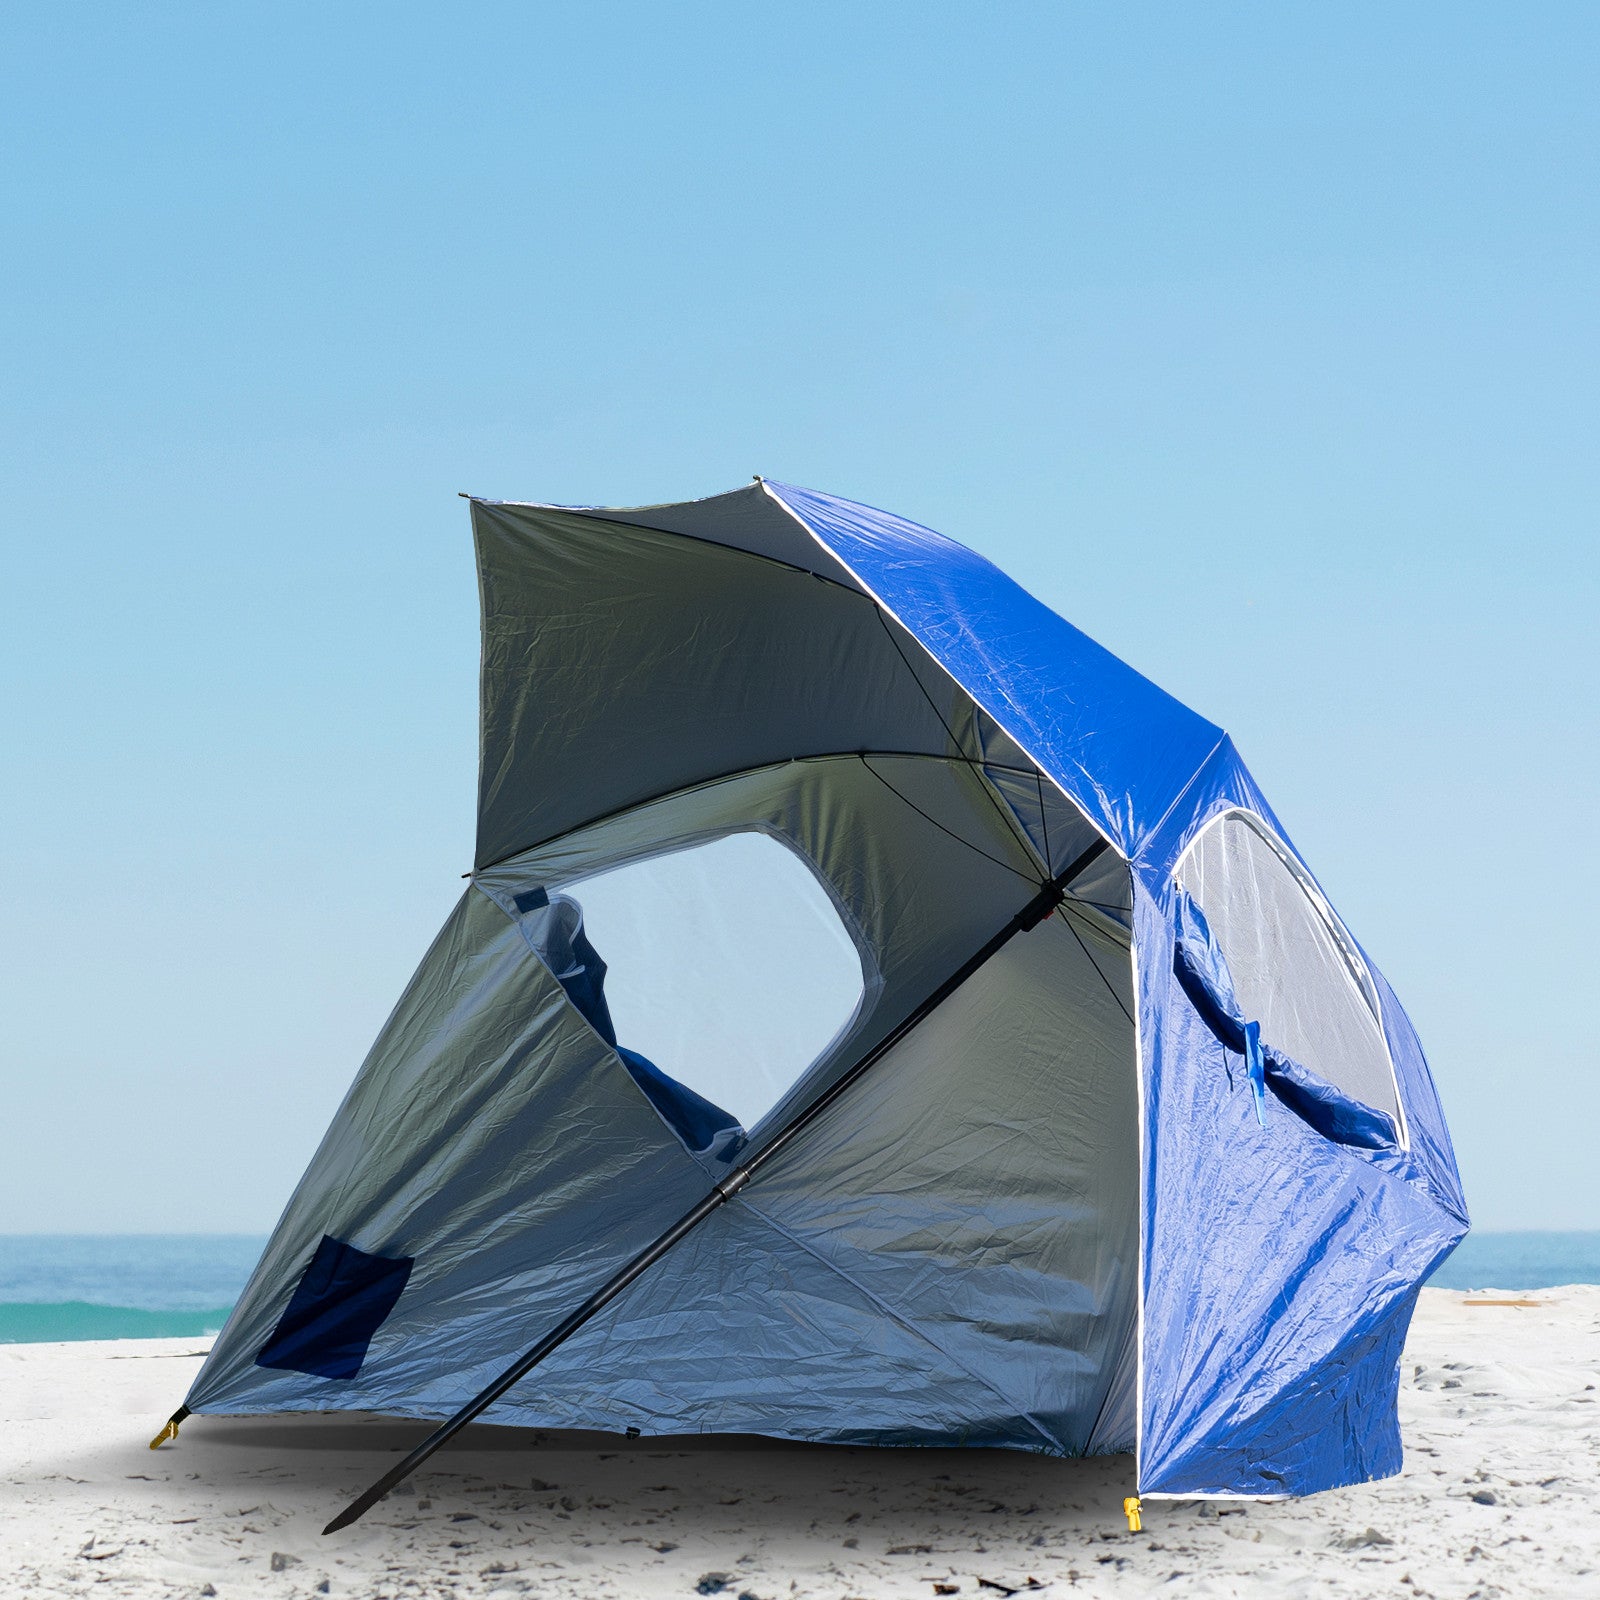 Havana Outdoors Beach Umbrella 2.4M Outdoor Garden Beach Portable Shade Shelter - Blue - SILBERSHELL